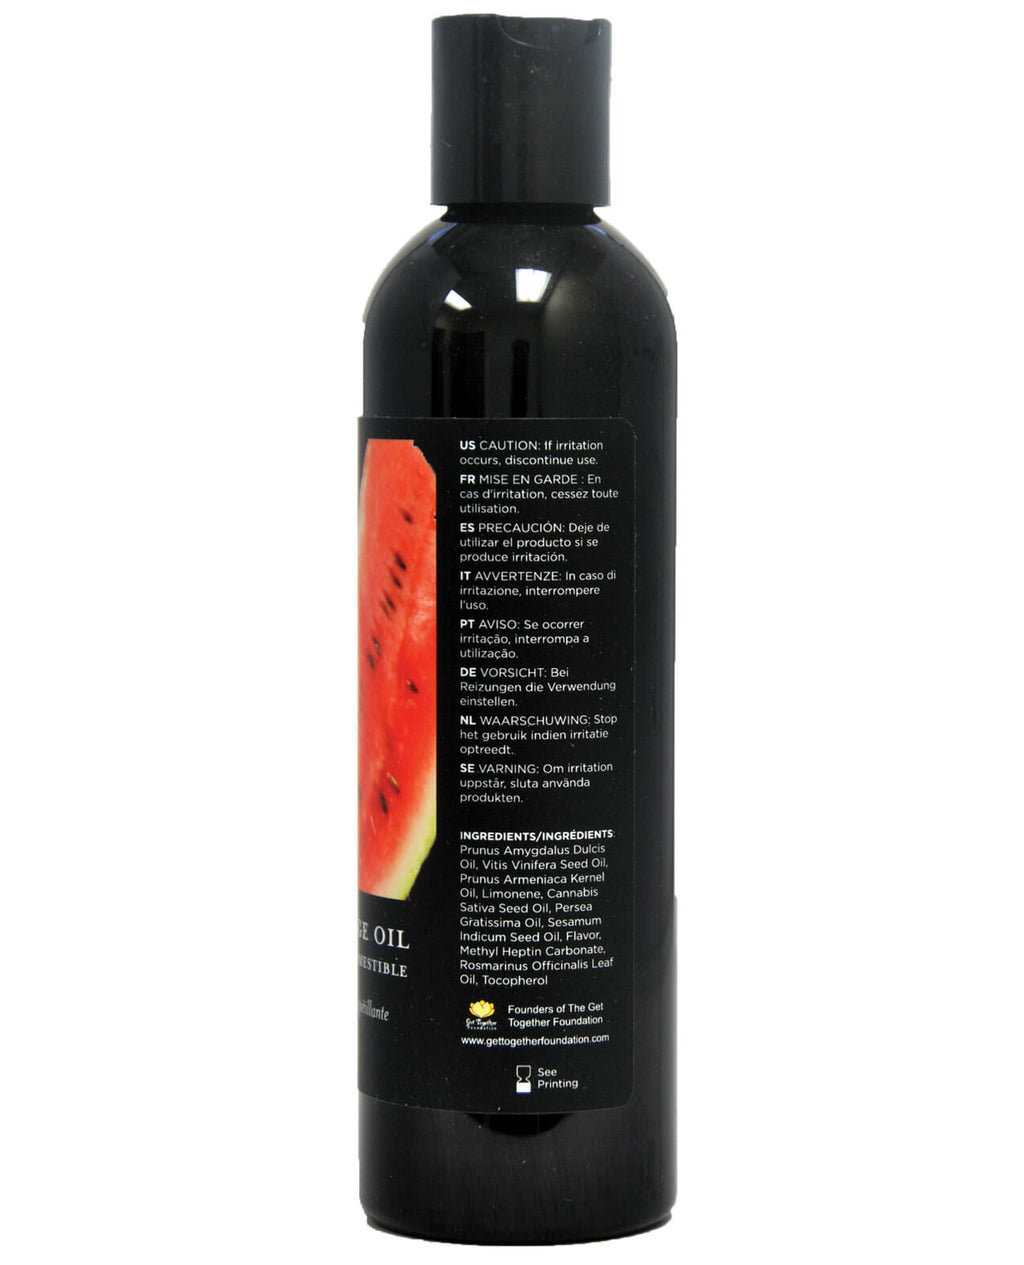 Earthly Body Edible Watermelon Massage Oil - 8 oz